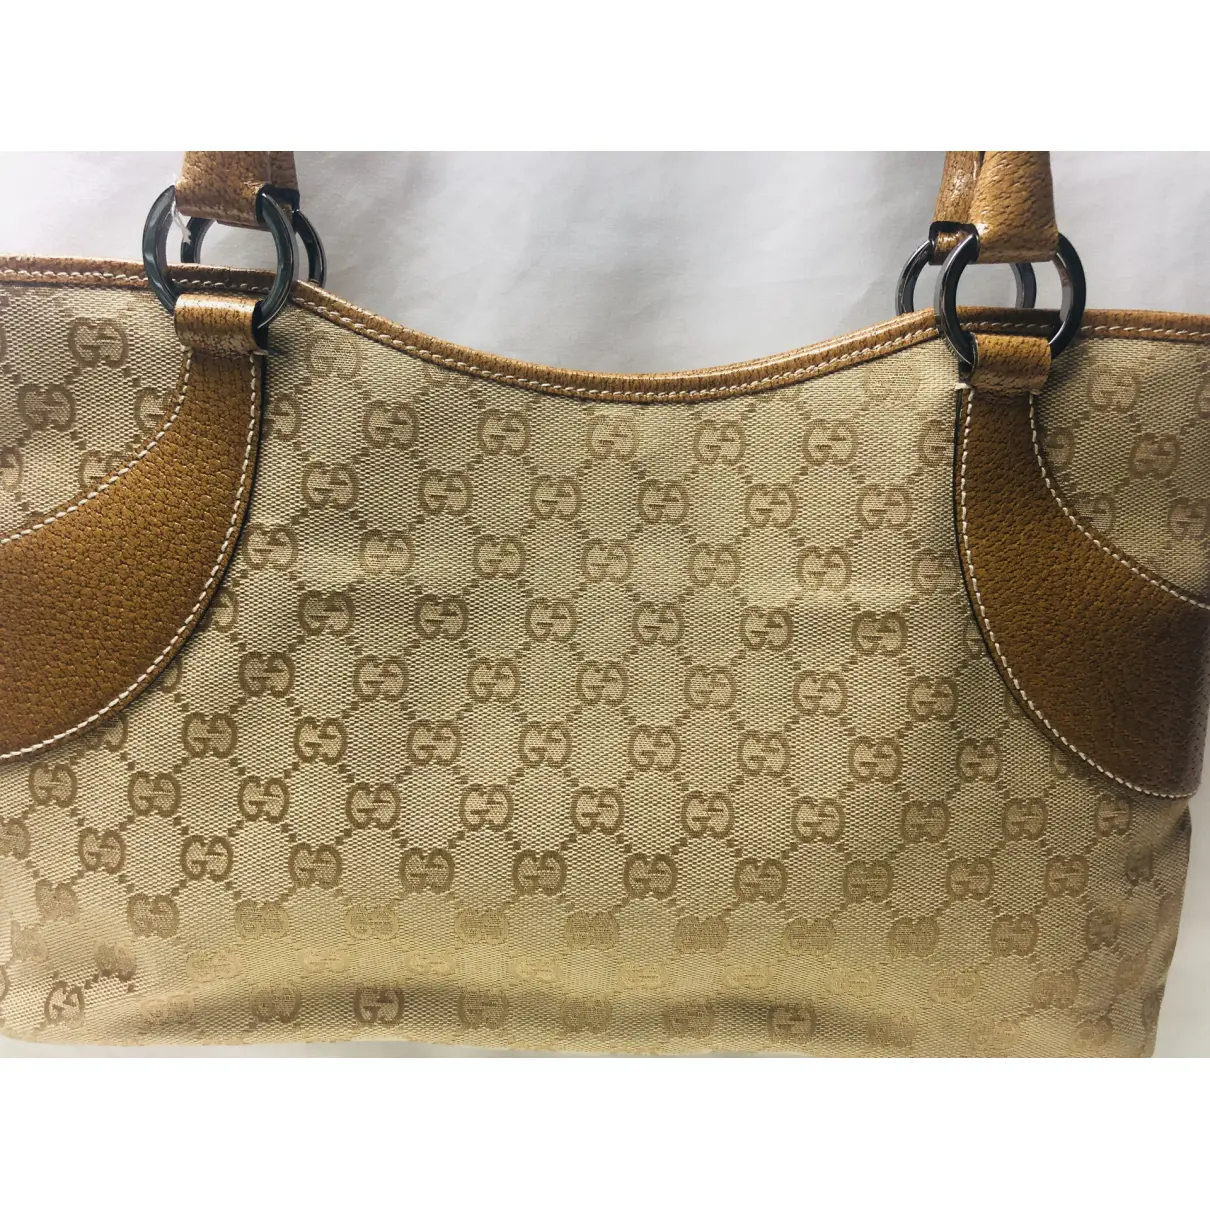 Buy Gucci Sukey leather handbag online